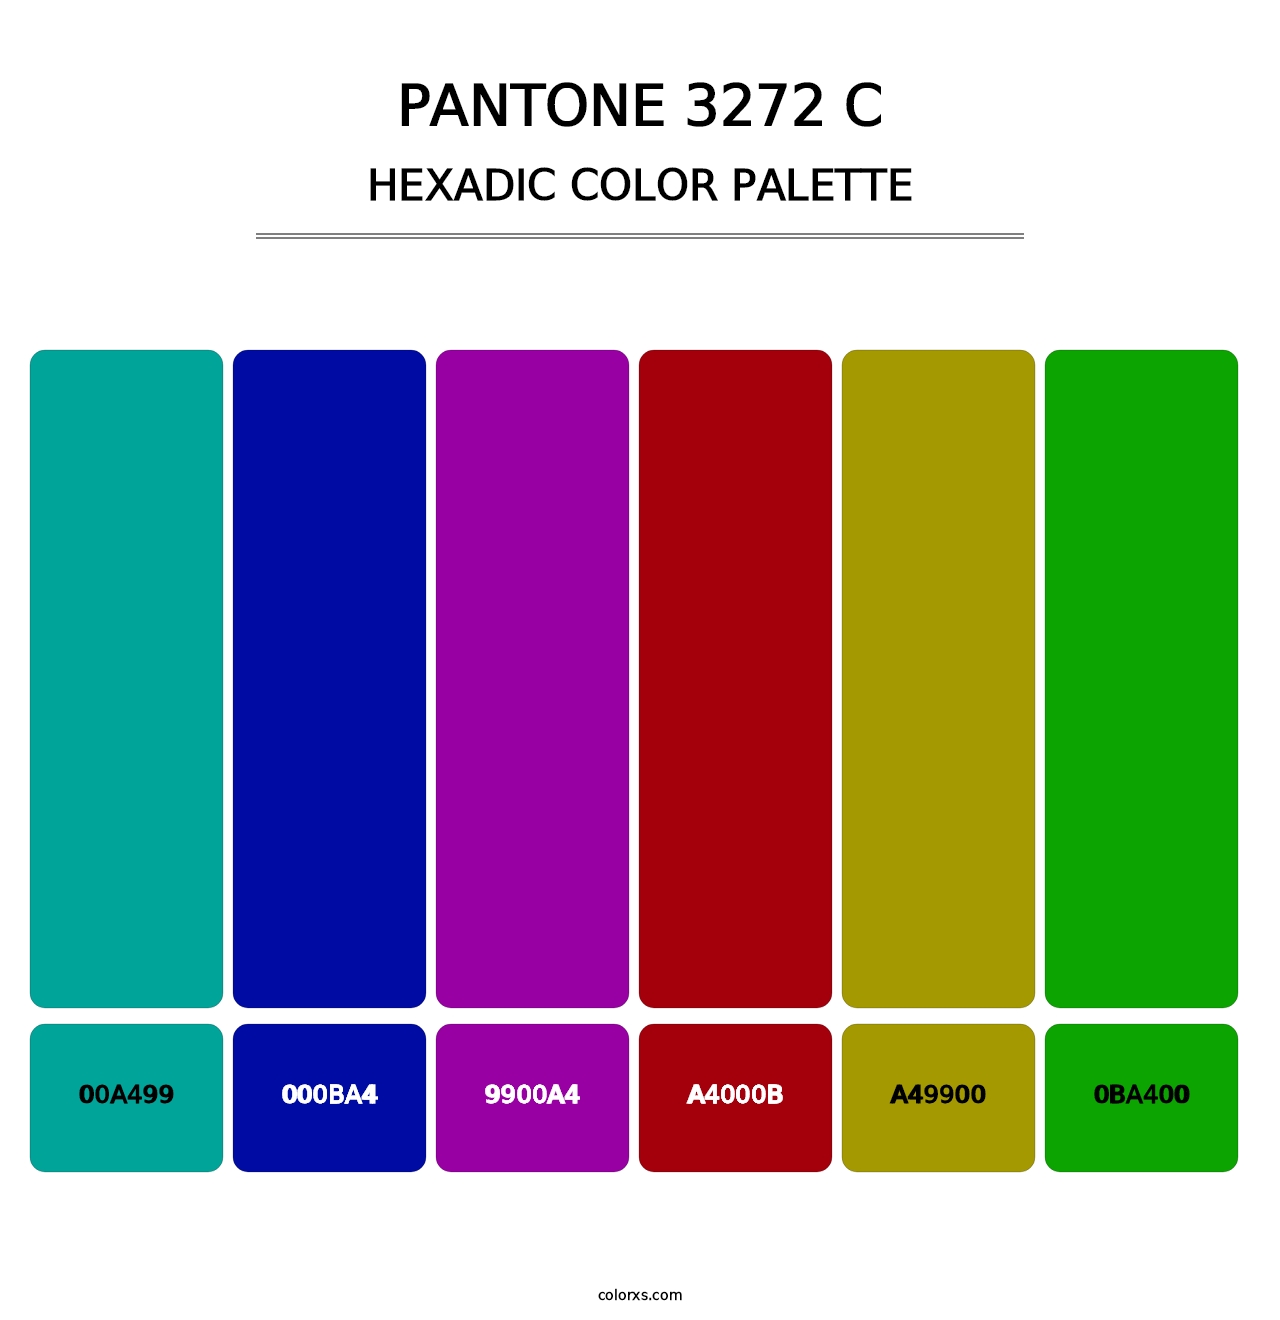 PANTONE 3272 C - Hexadic Color Palette